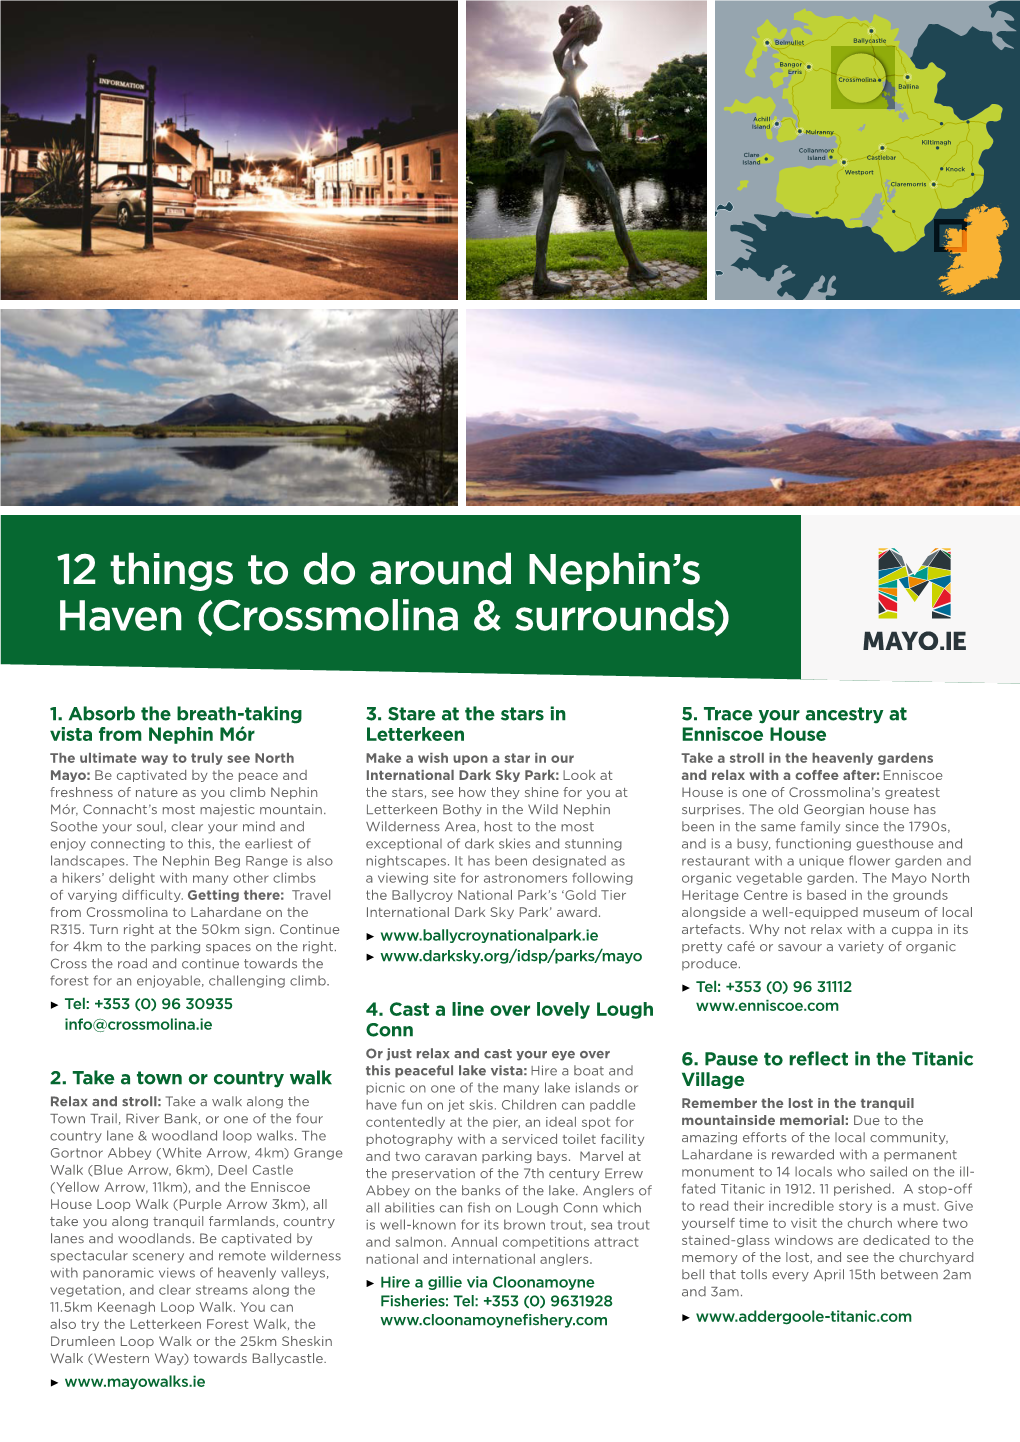 12 Things to Do Around Nephin's Haven (Crossmolina & Surrounds)